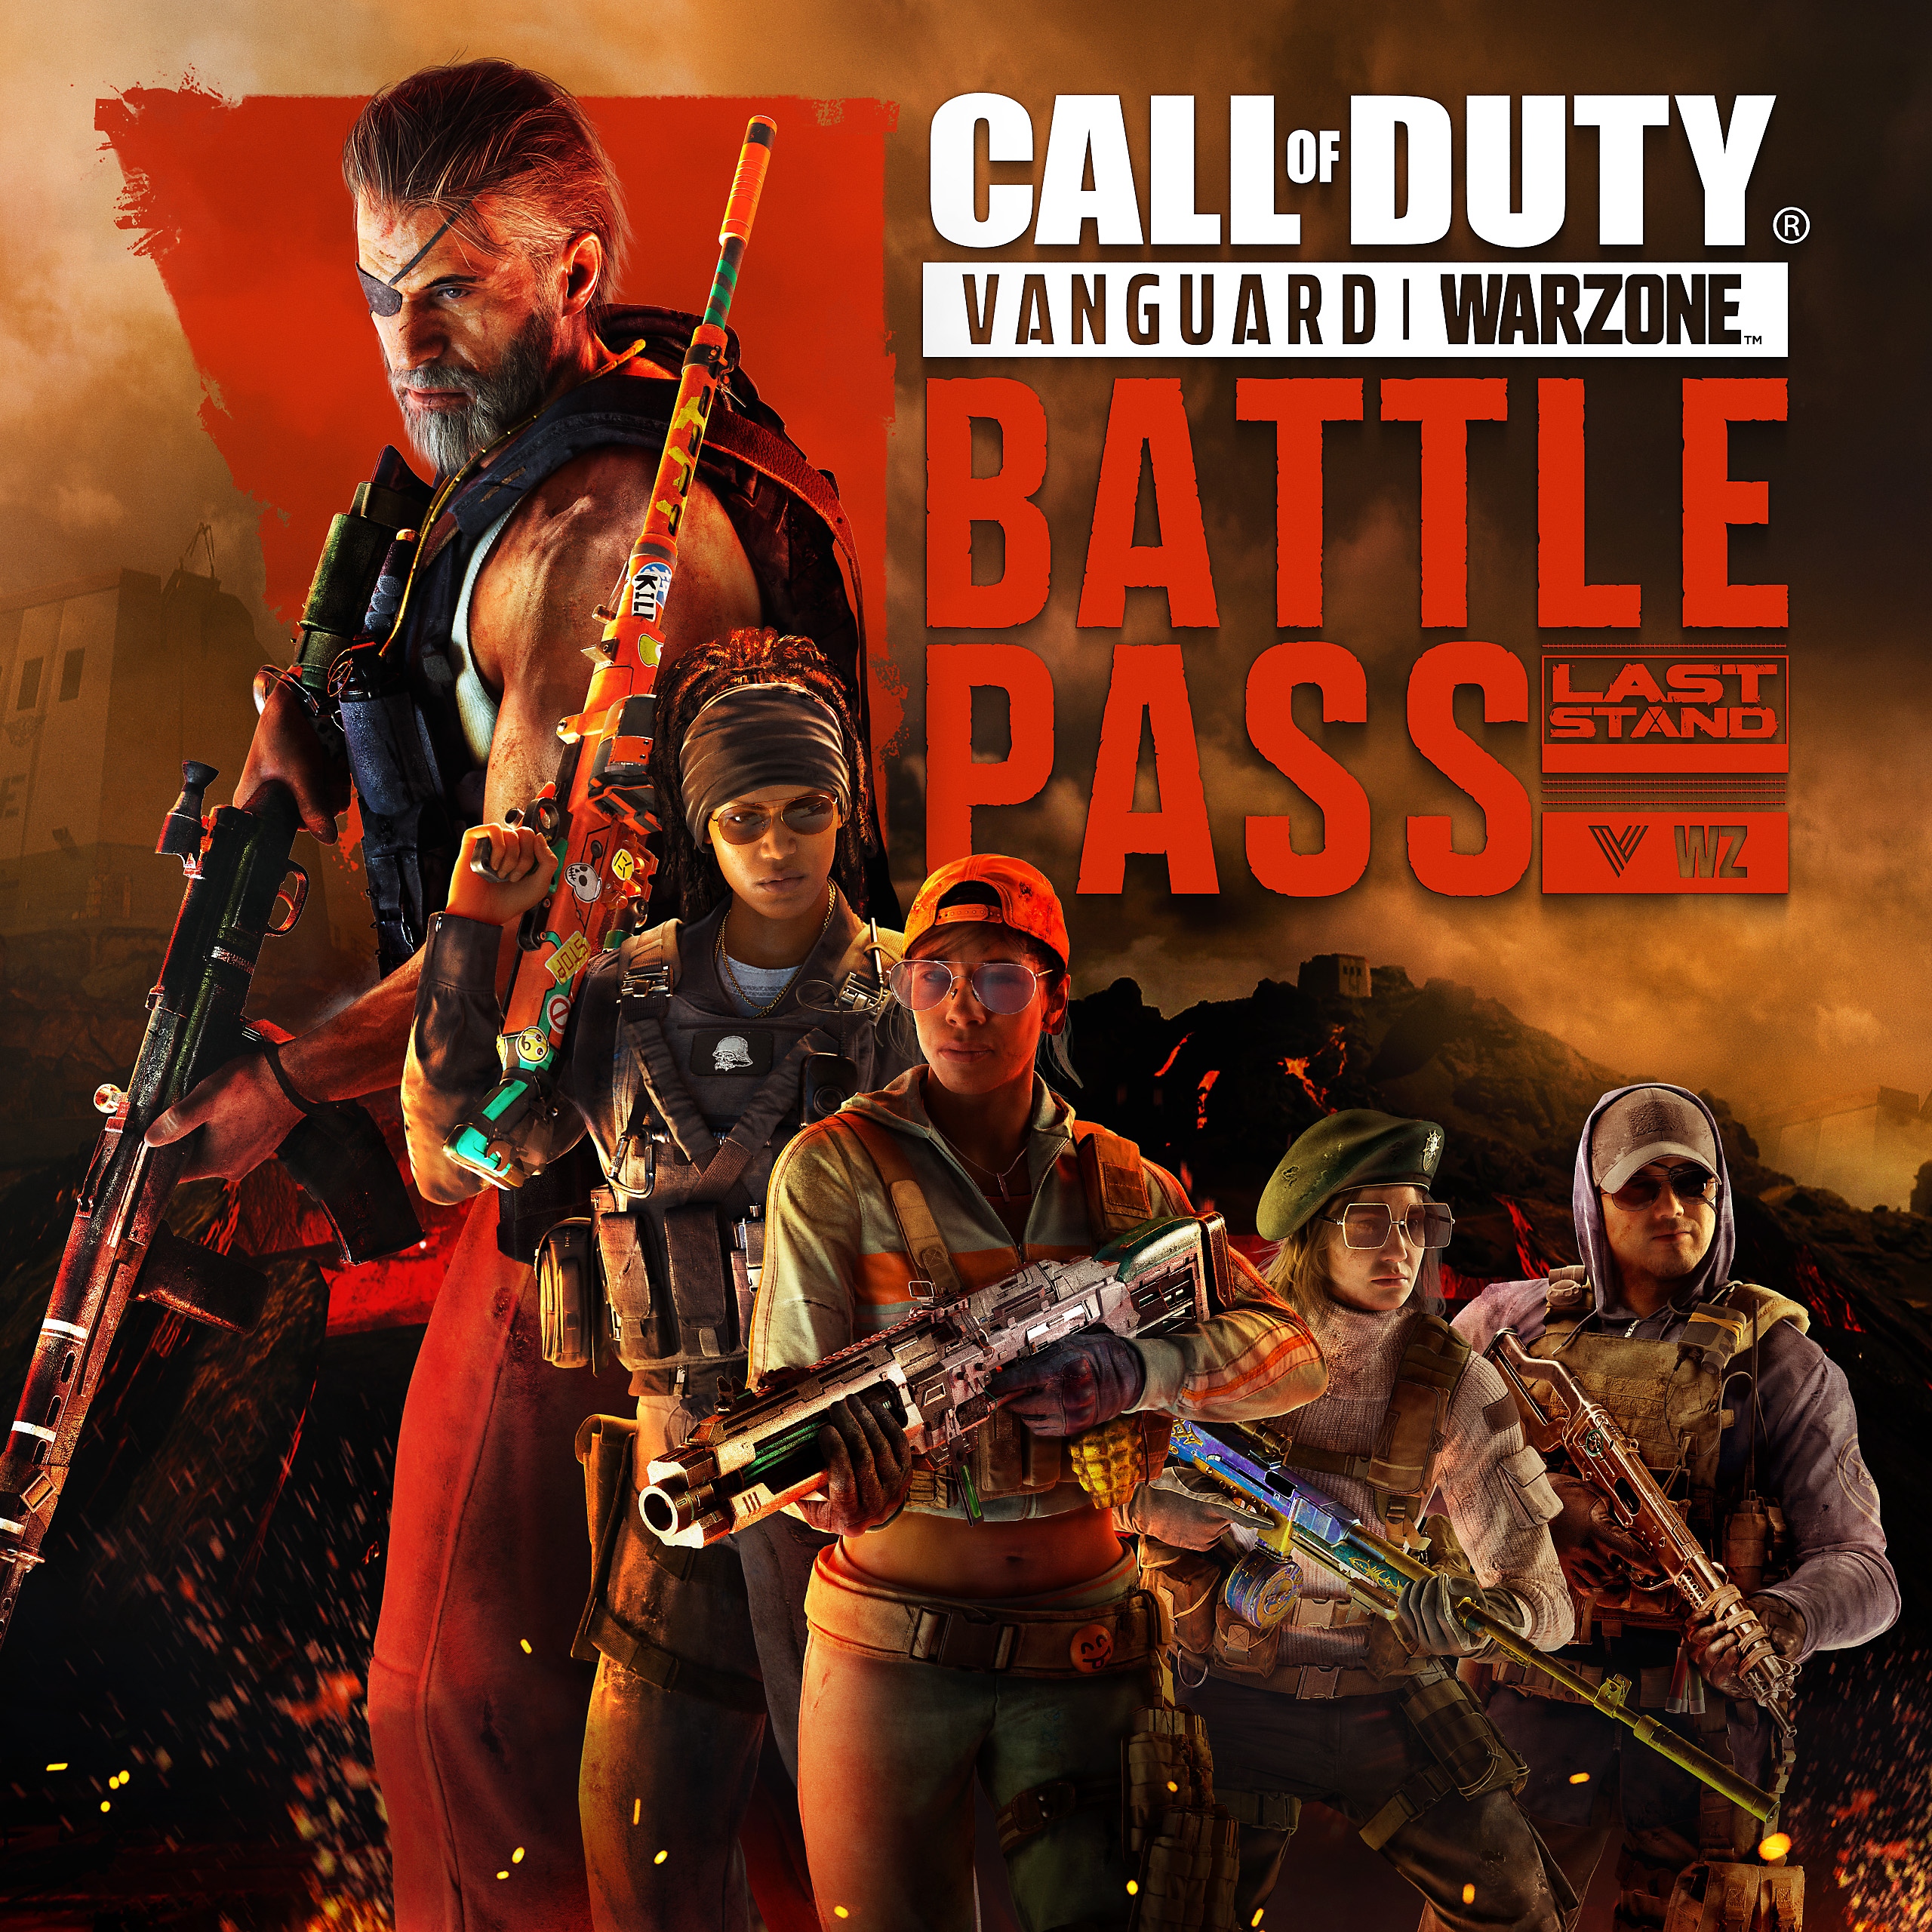 Call of Duty – peta sezona – slikovna podoba prepustnice Battle Pass